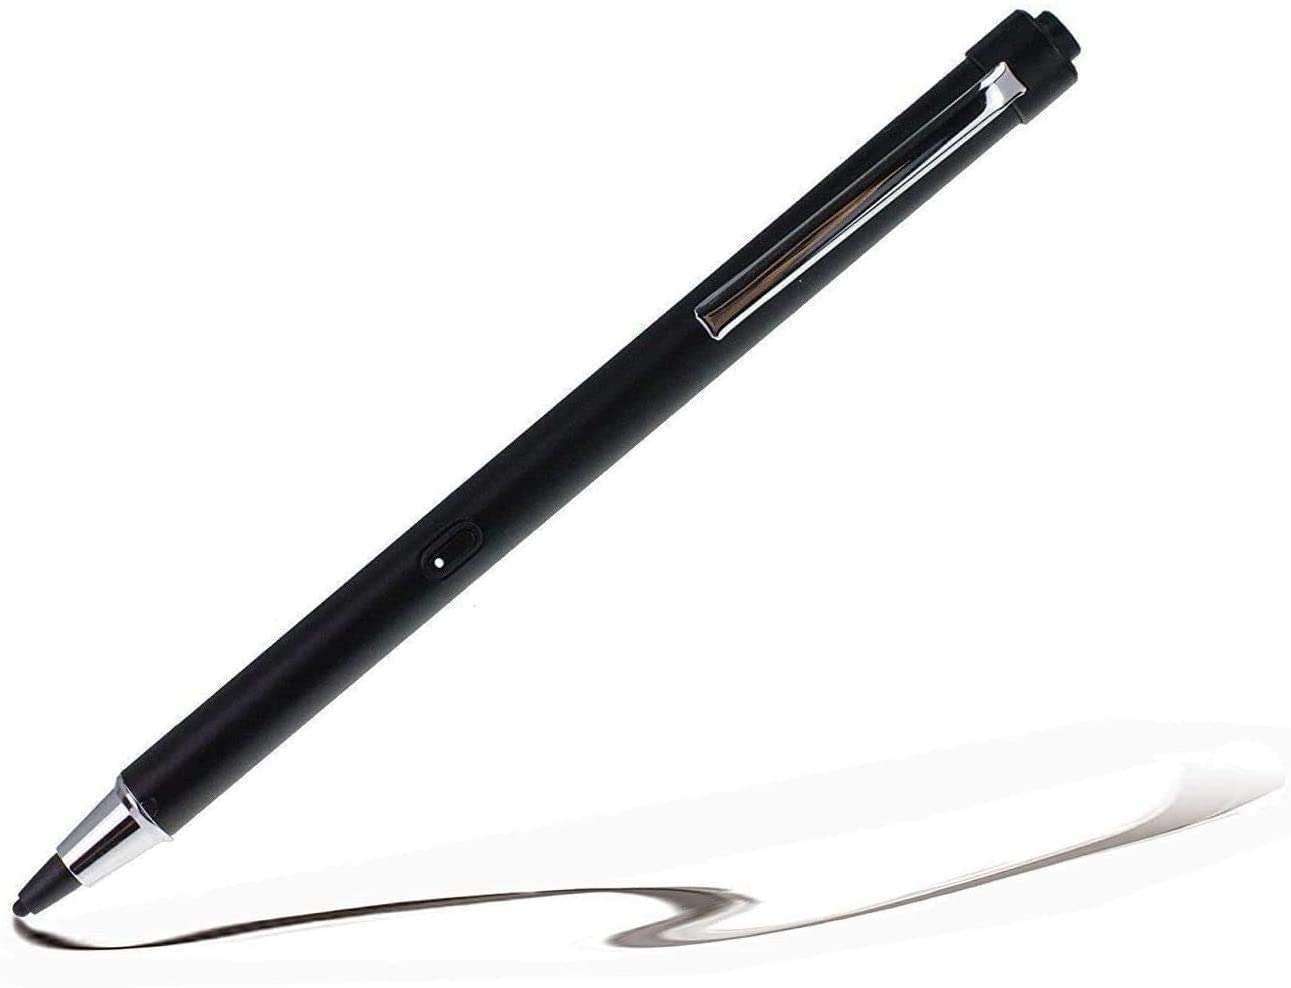 Broonel Black stylus for the TECLAST F7 Plus 14.1